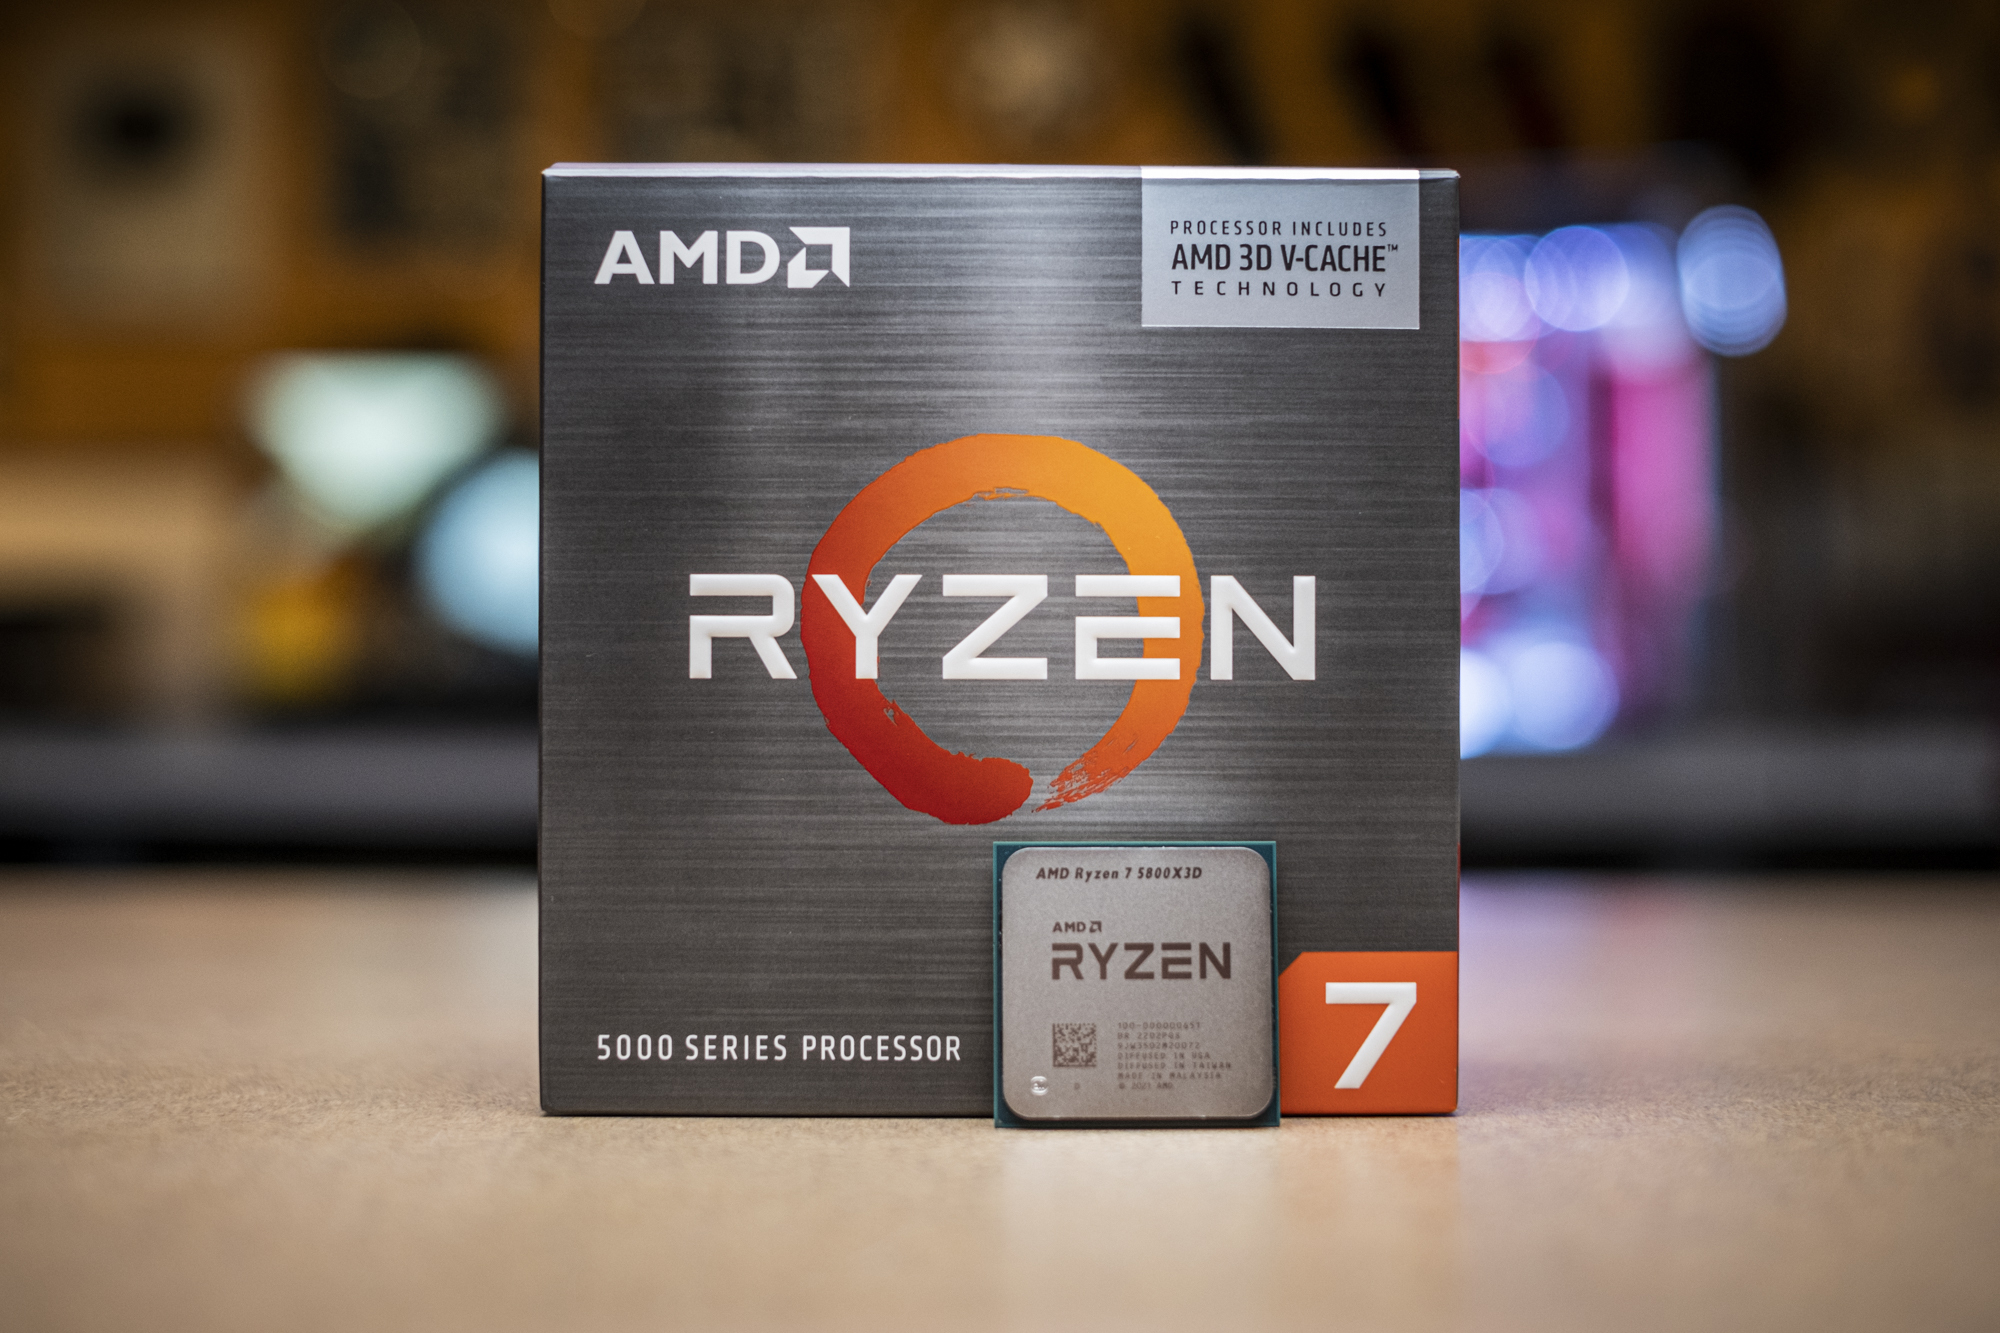 Ryzen 7 5800X3D review: Showing how far AMD's Ryzen has come | PCWorld